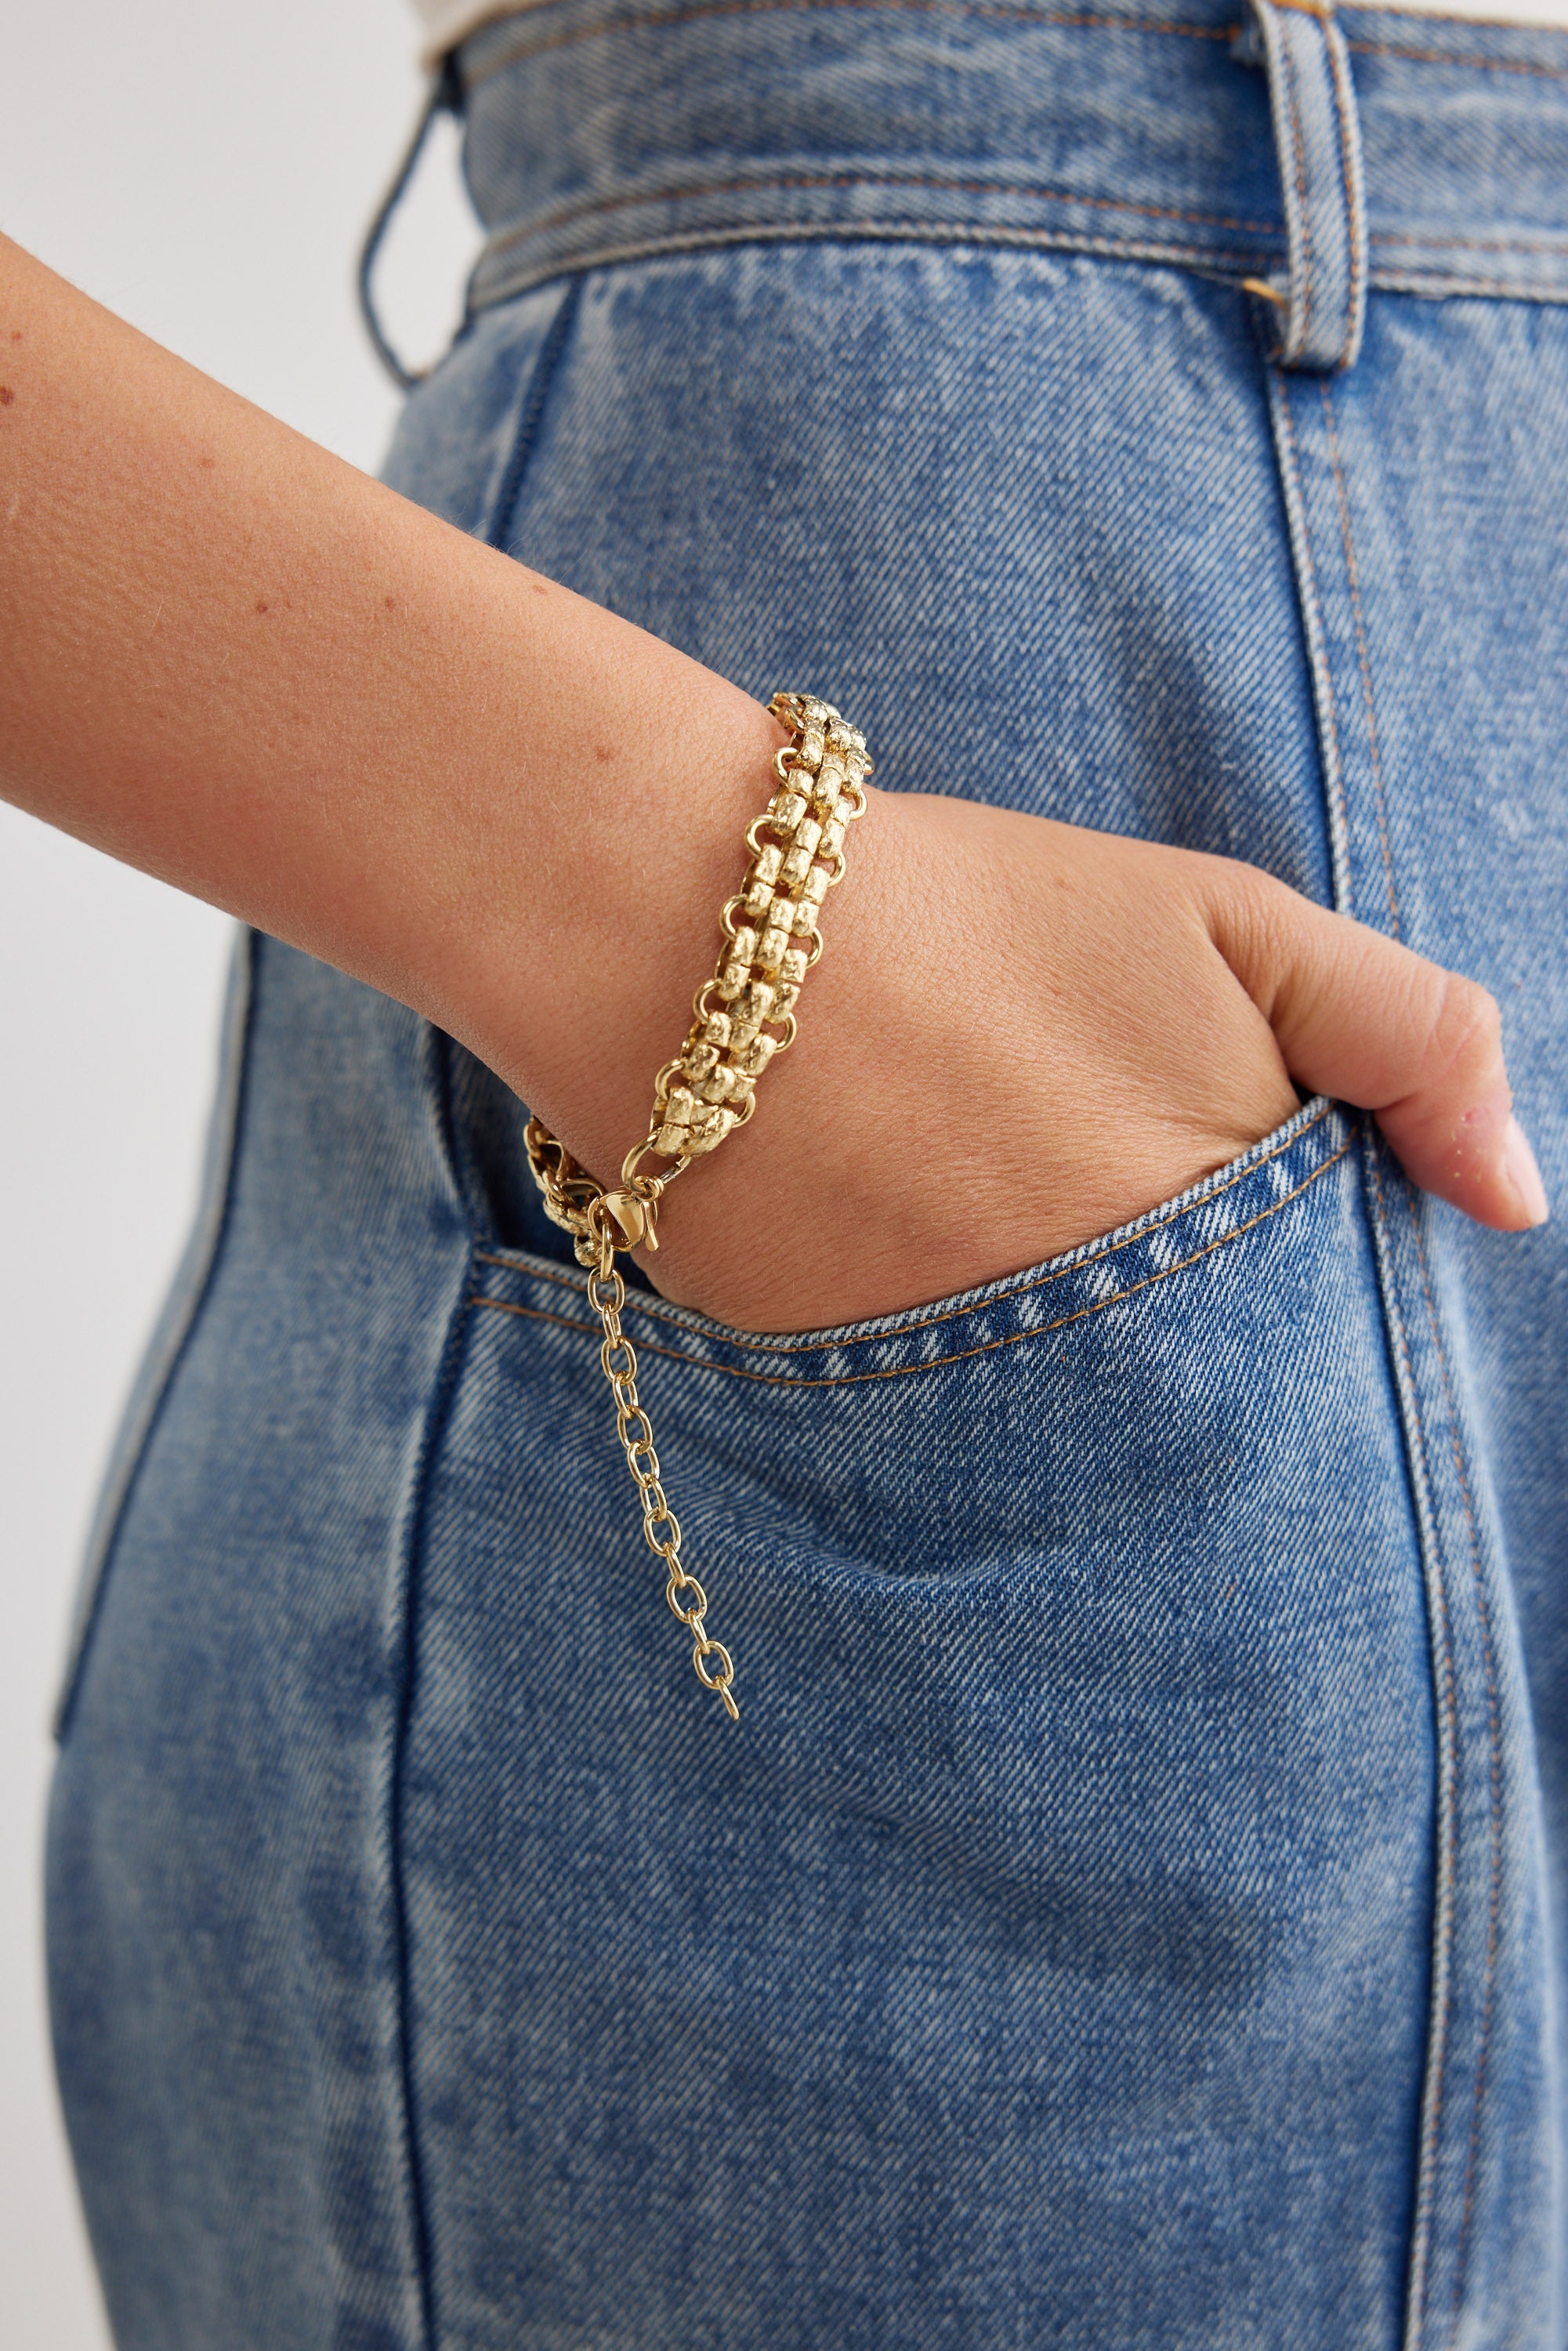 Rolo Chain Bracelet | Handmade by Delia Langan Jewelry